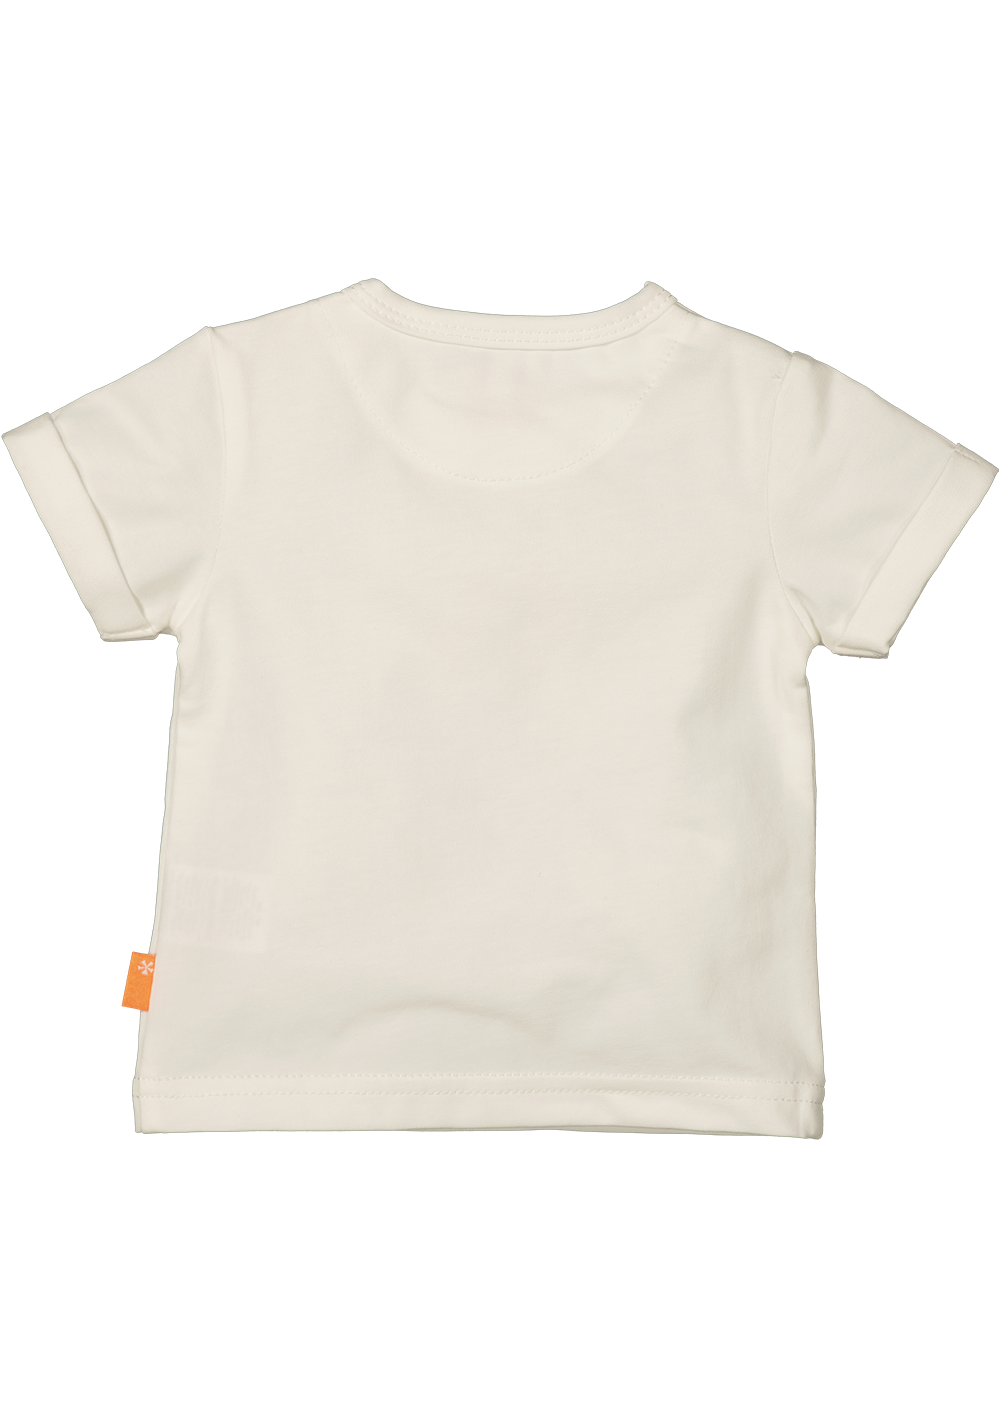 BESS S24 l2 Shirt sh.sl. Palm White 241081-001